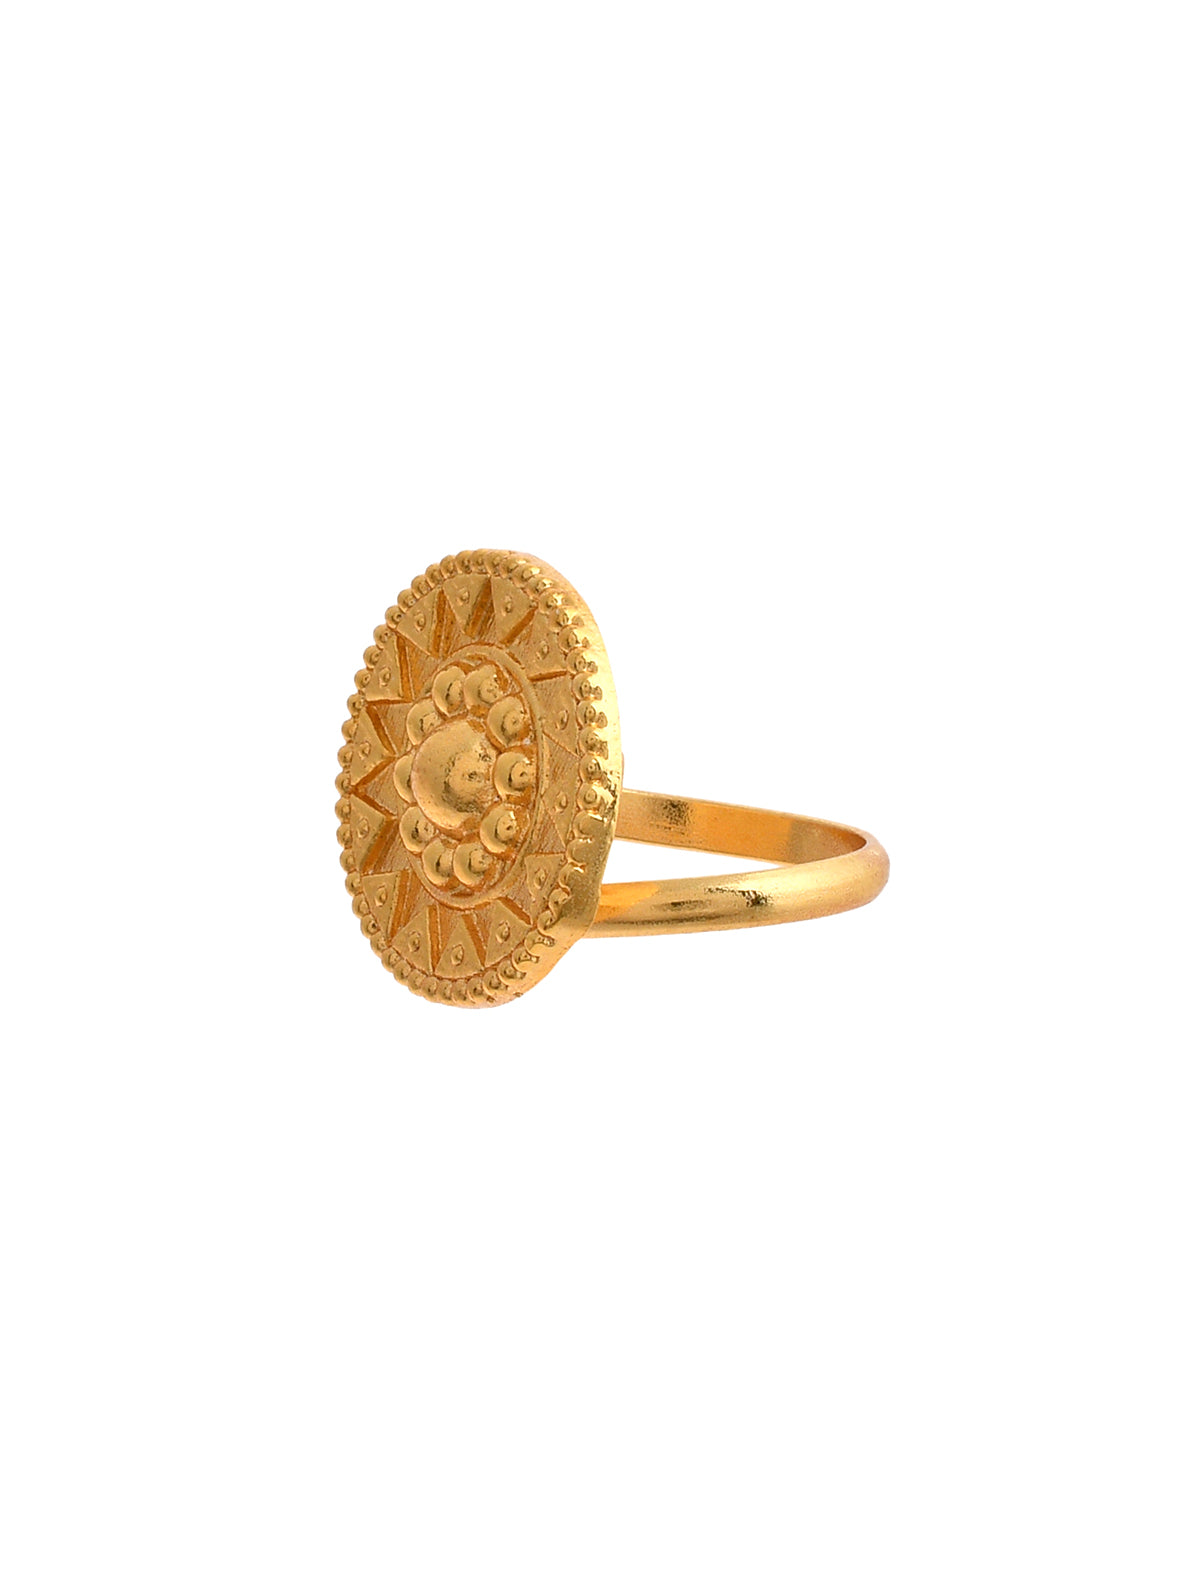 BIS 916 HALLMARK 22KT GOLD FINGER RING APPROX WGT: 1.350 GRAM FOR WOMEN.,  सोने की अंगूठी - Rajlaxmi Jewellers, Kolkata | ID: 2851570427333